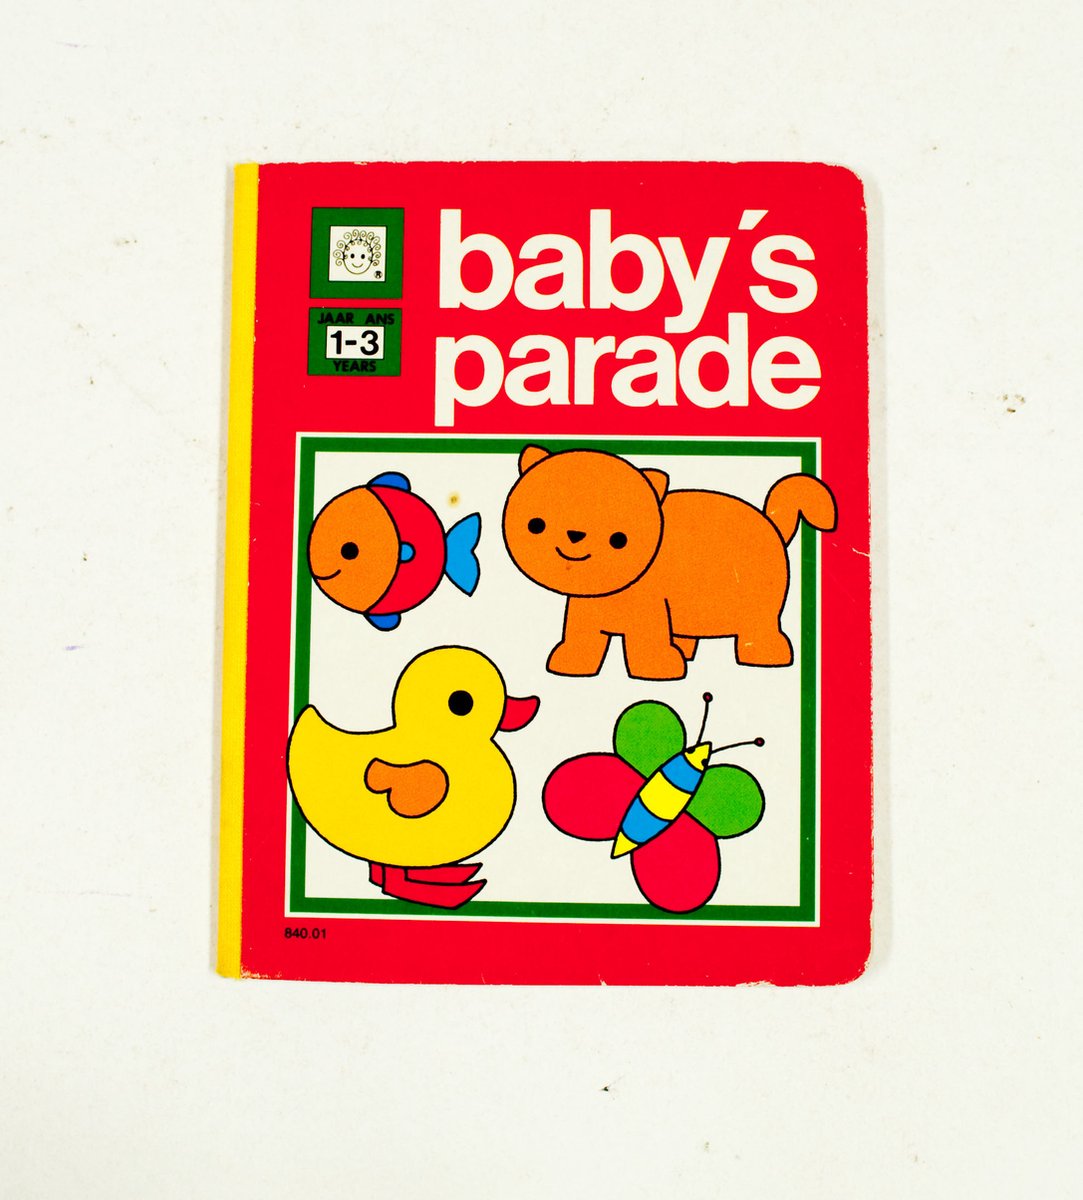 Baby parade / babies parade